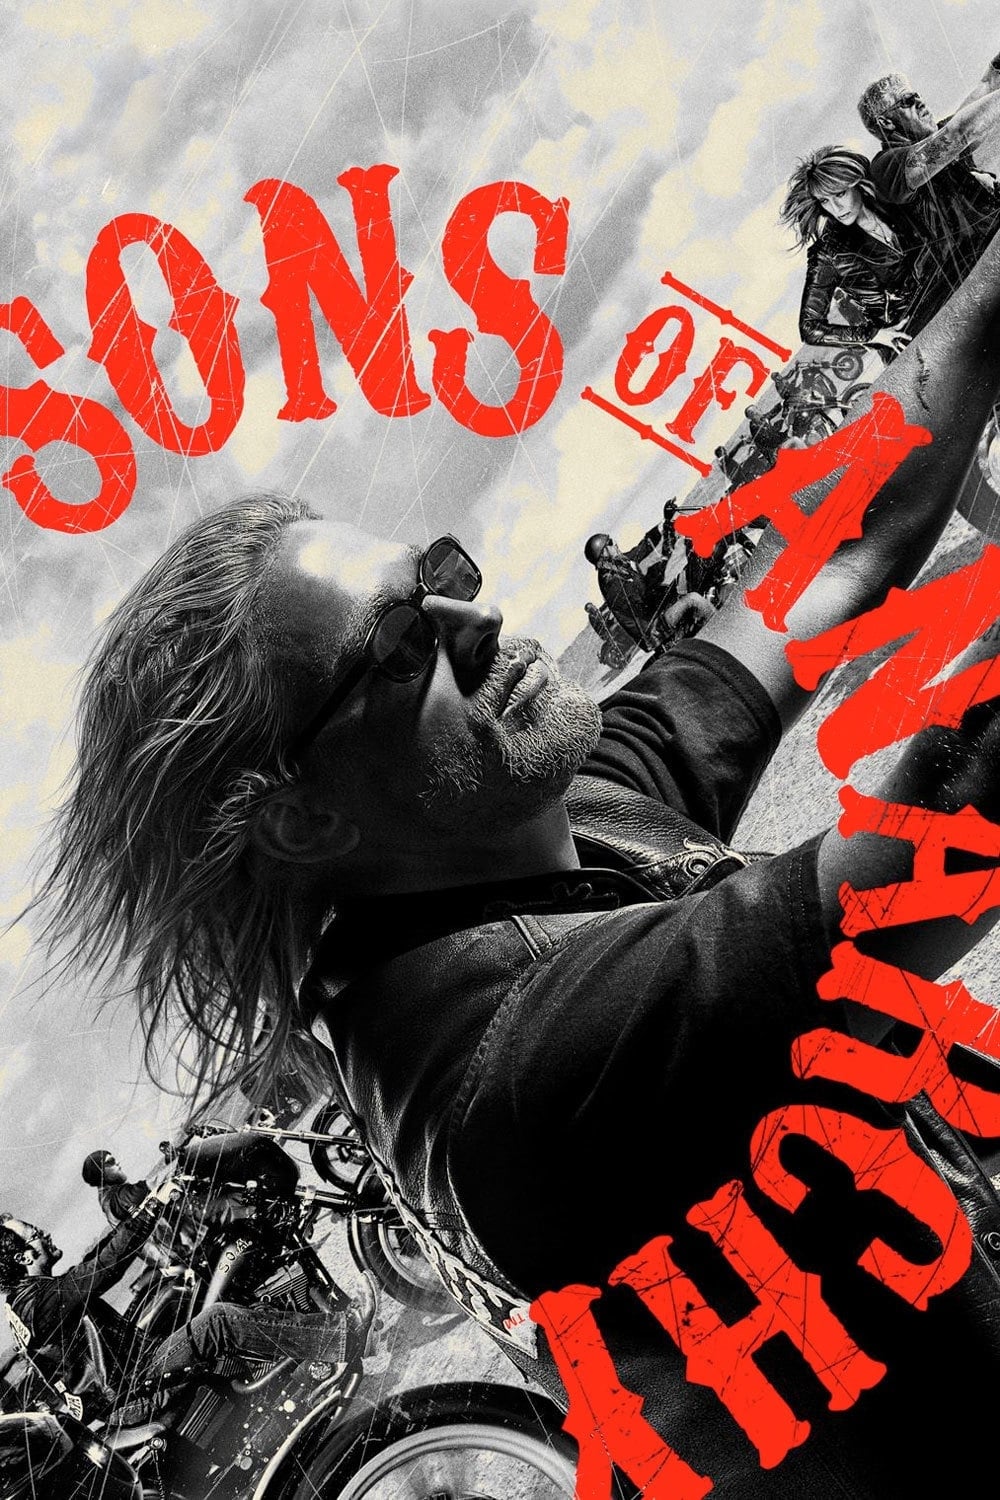 Sons of Anarchy (2008 - 2014) Seizoen 1 Disc 1 BD50